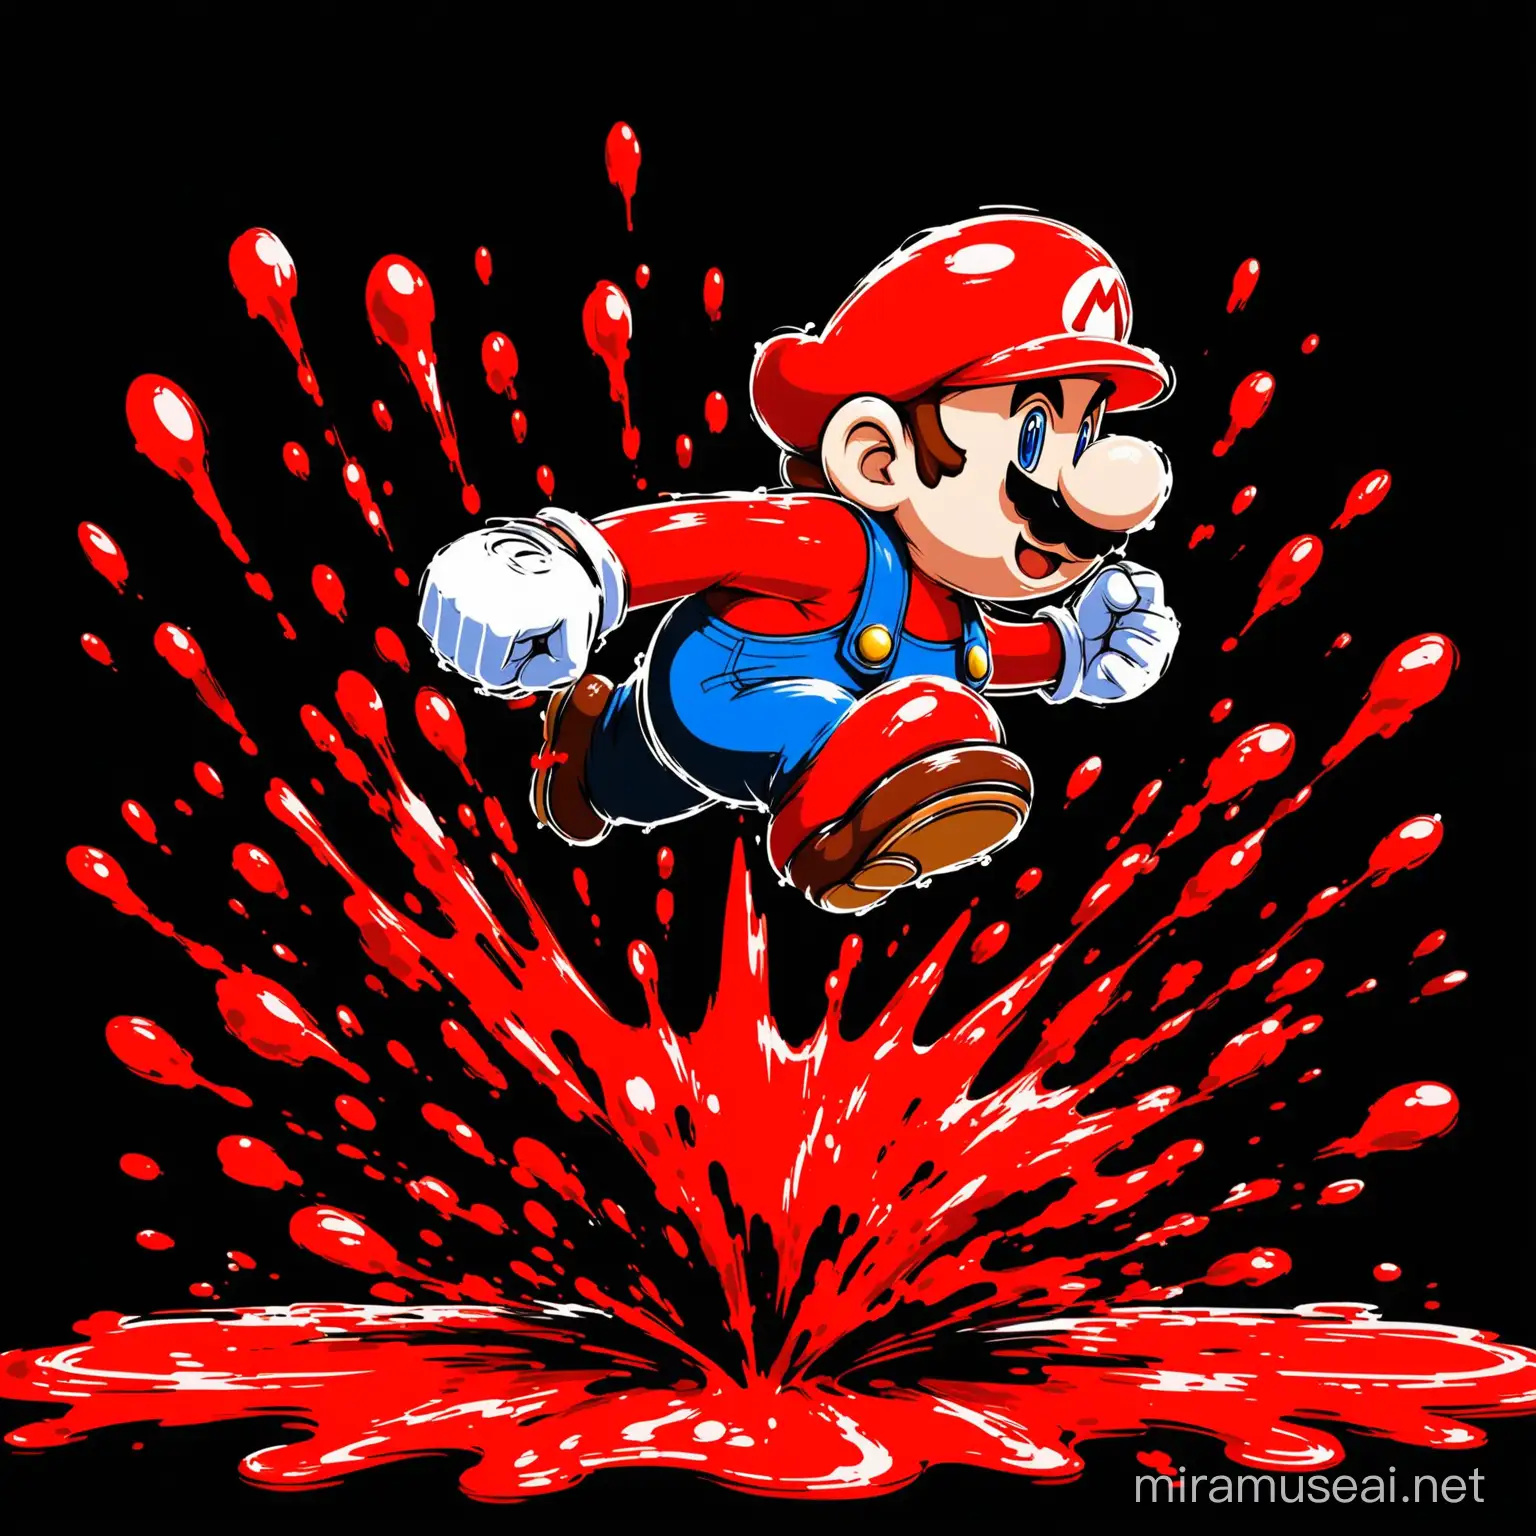 Fantasy Cartoon Super Mario Bros Running Against Black Background with Red Paint Splashes